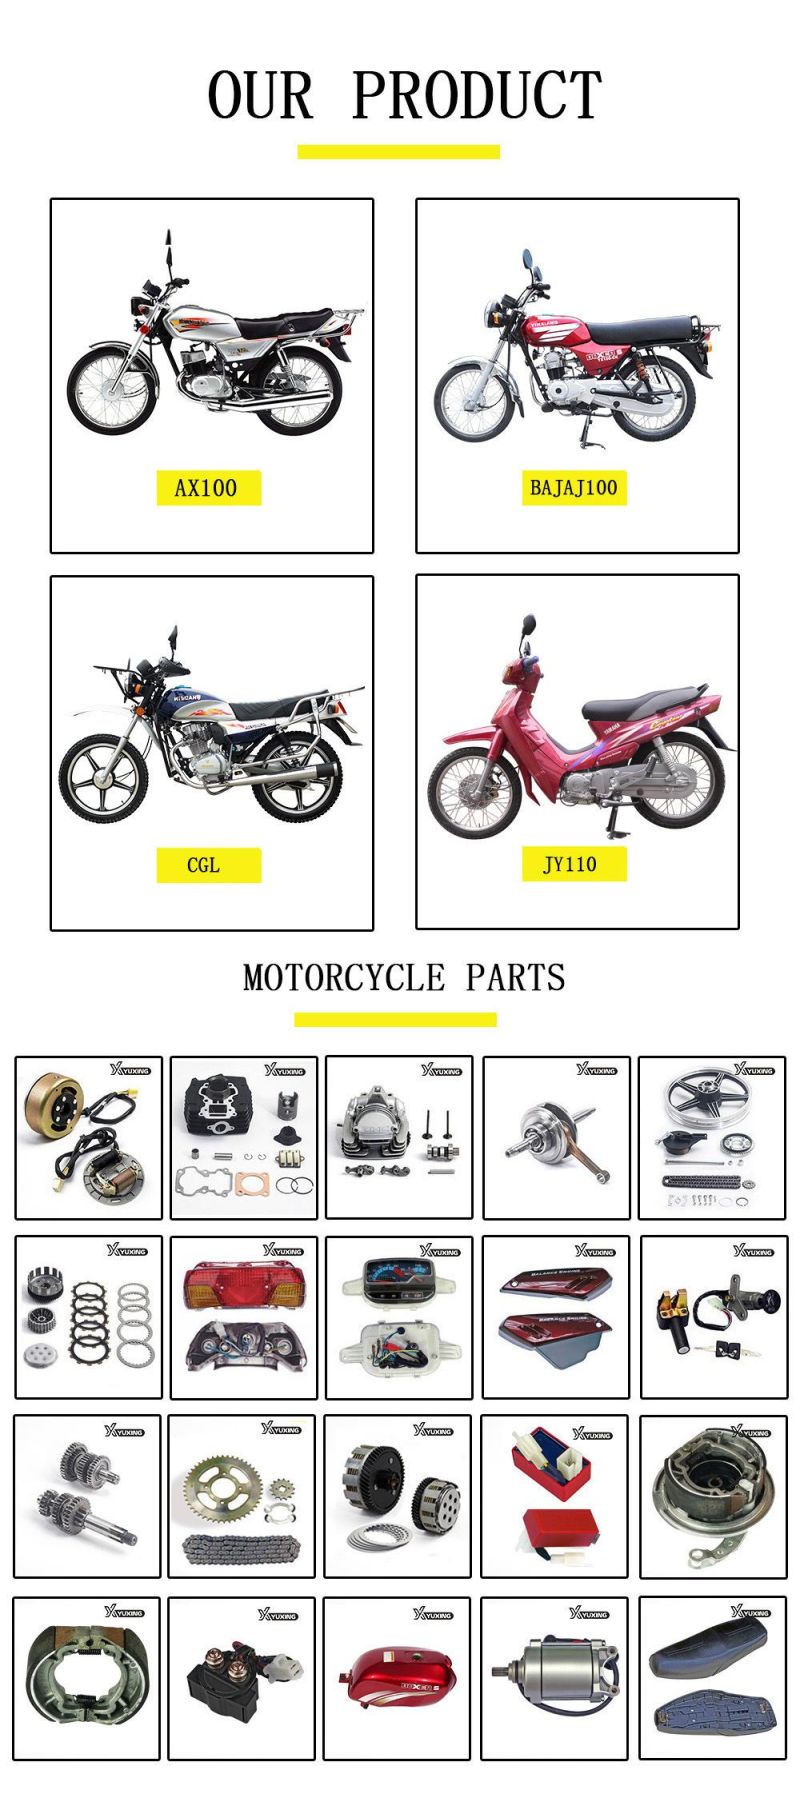 Jy110 High Quality Motorcycle Parts Motorcycle Crankshaft